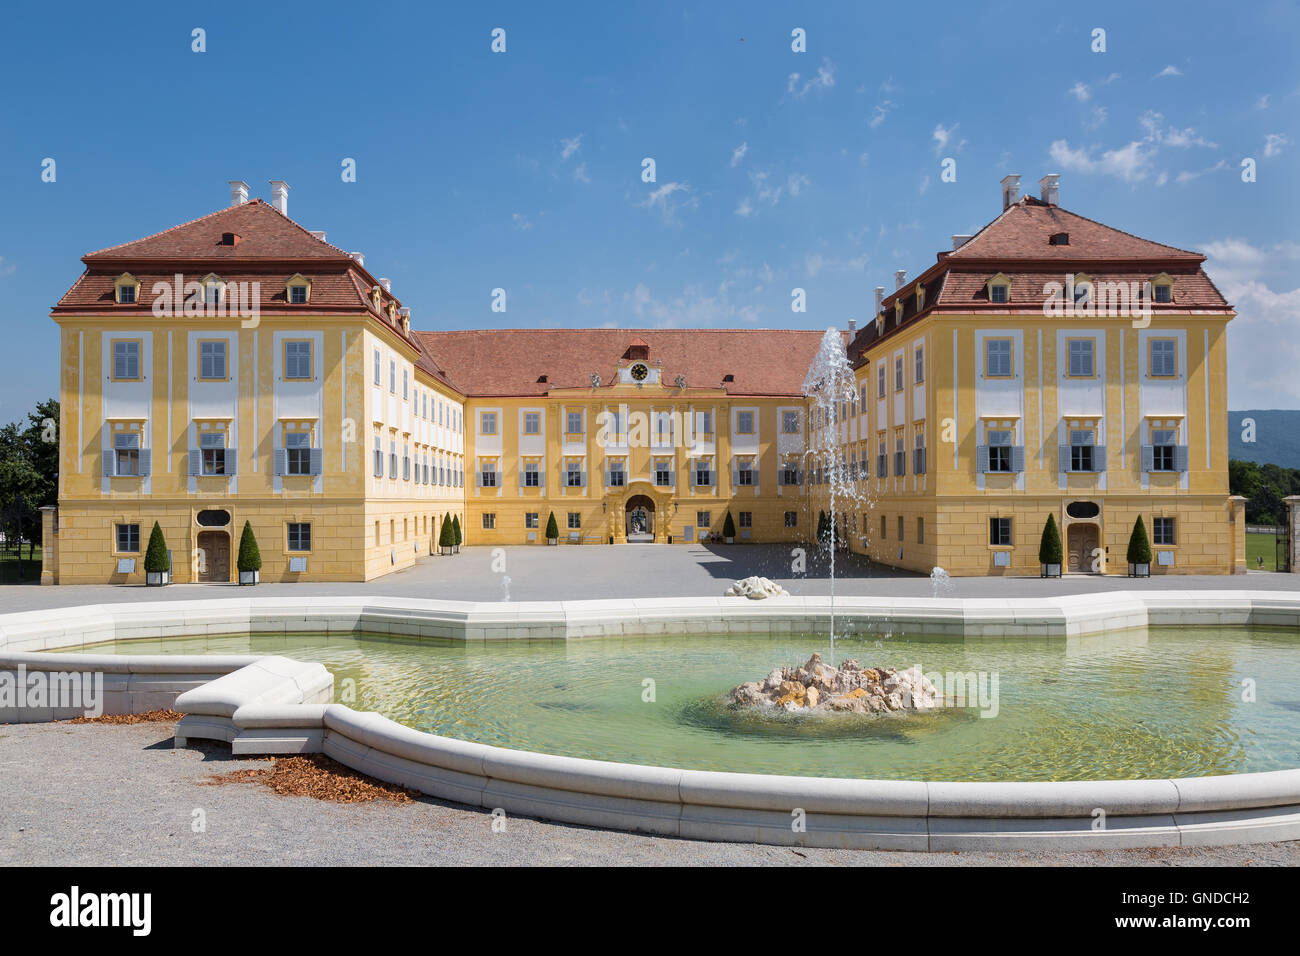 The rear of the castle Schloss Hof in Lower Austria Stock Photo